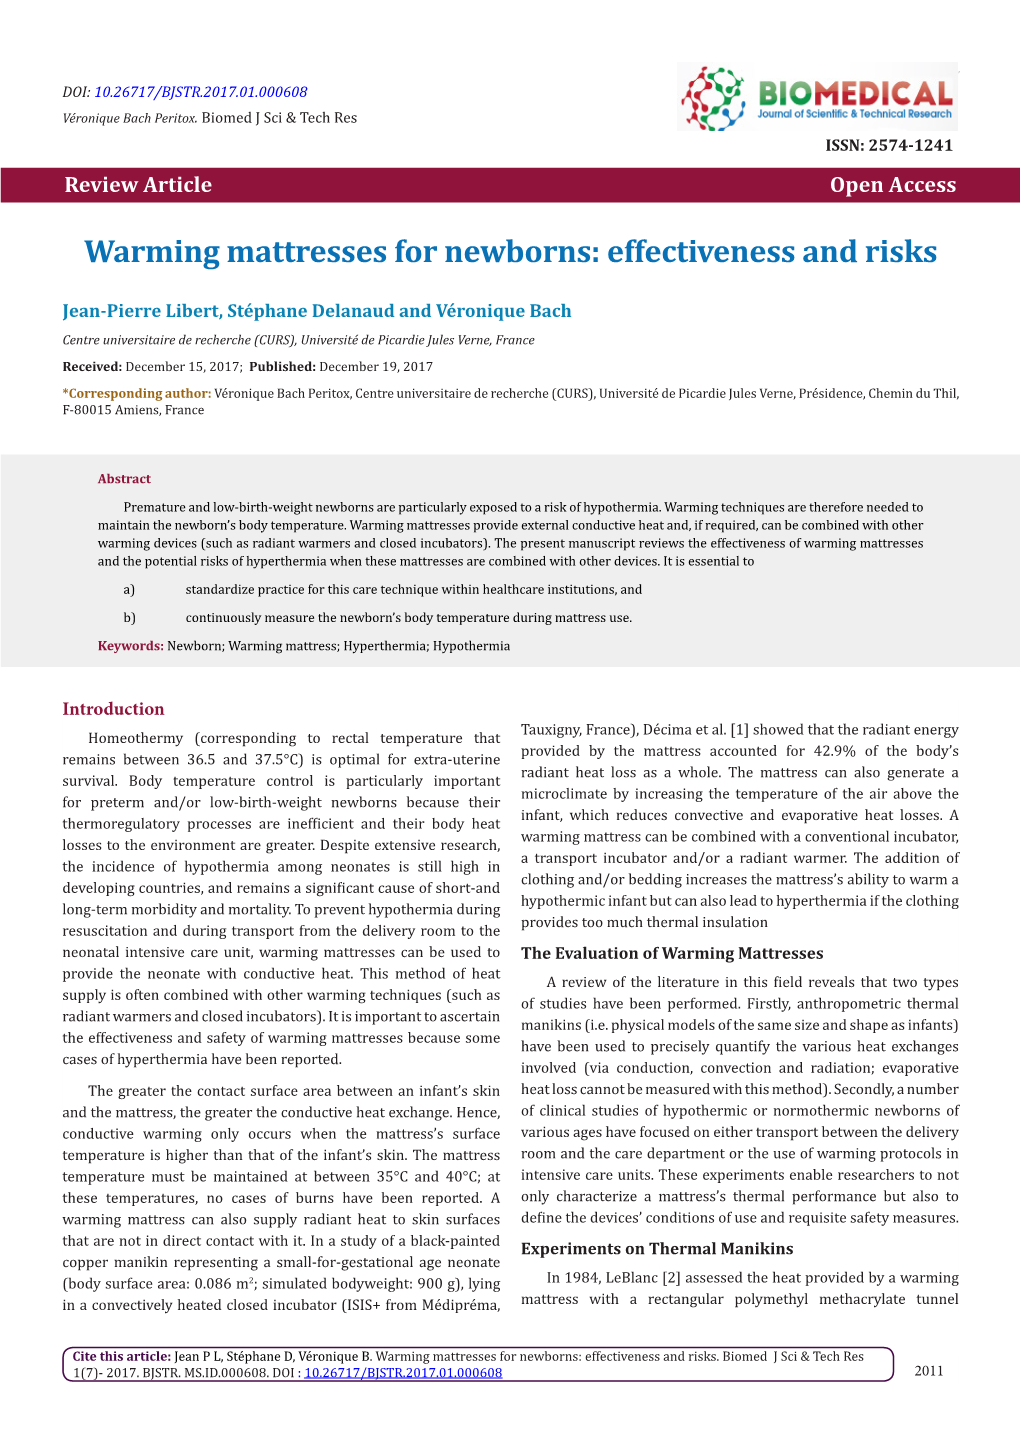 Warming Mattresses for Newborns: Effectiveness and Risks